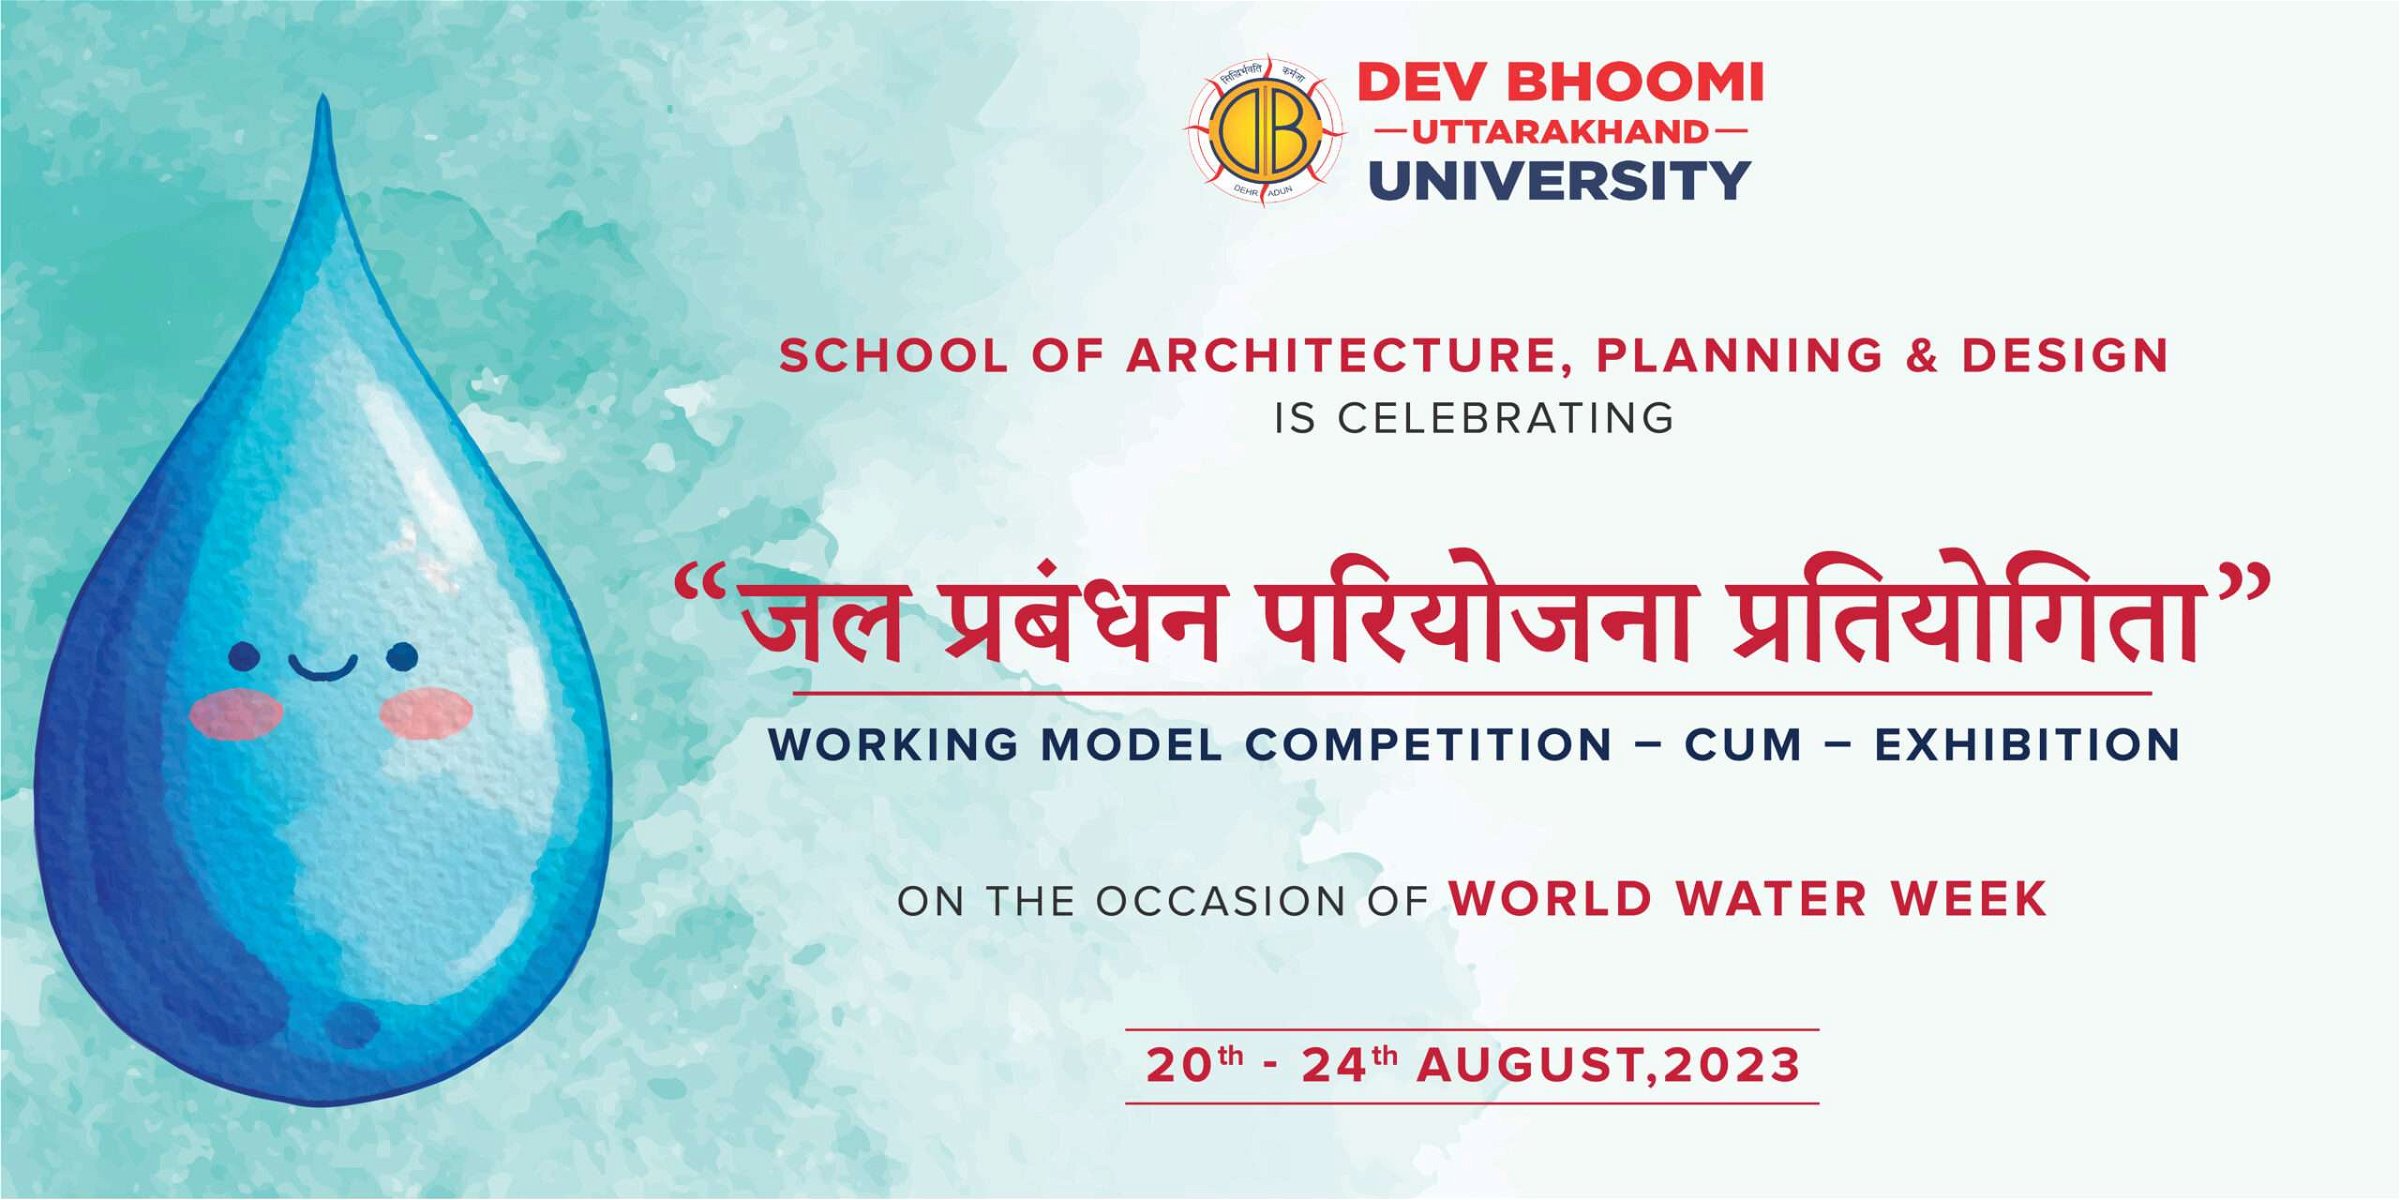 SoAPD presents ‘जल प्रबंधन परियोजना प्रतियोगिता’ on the occasion of World Water Week 20-24 August,2023